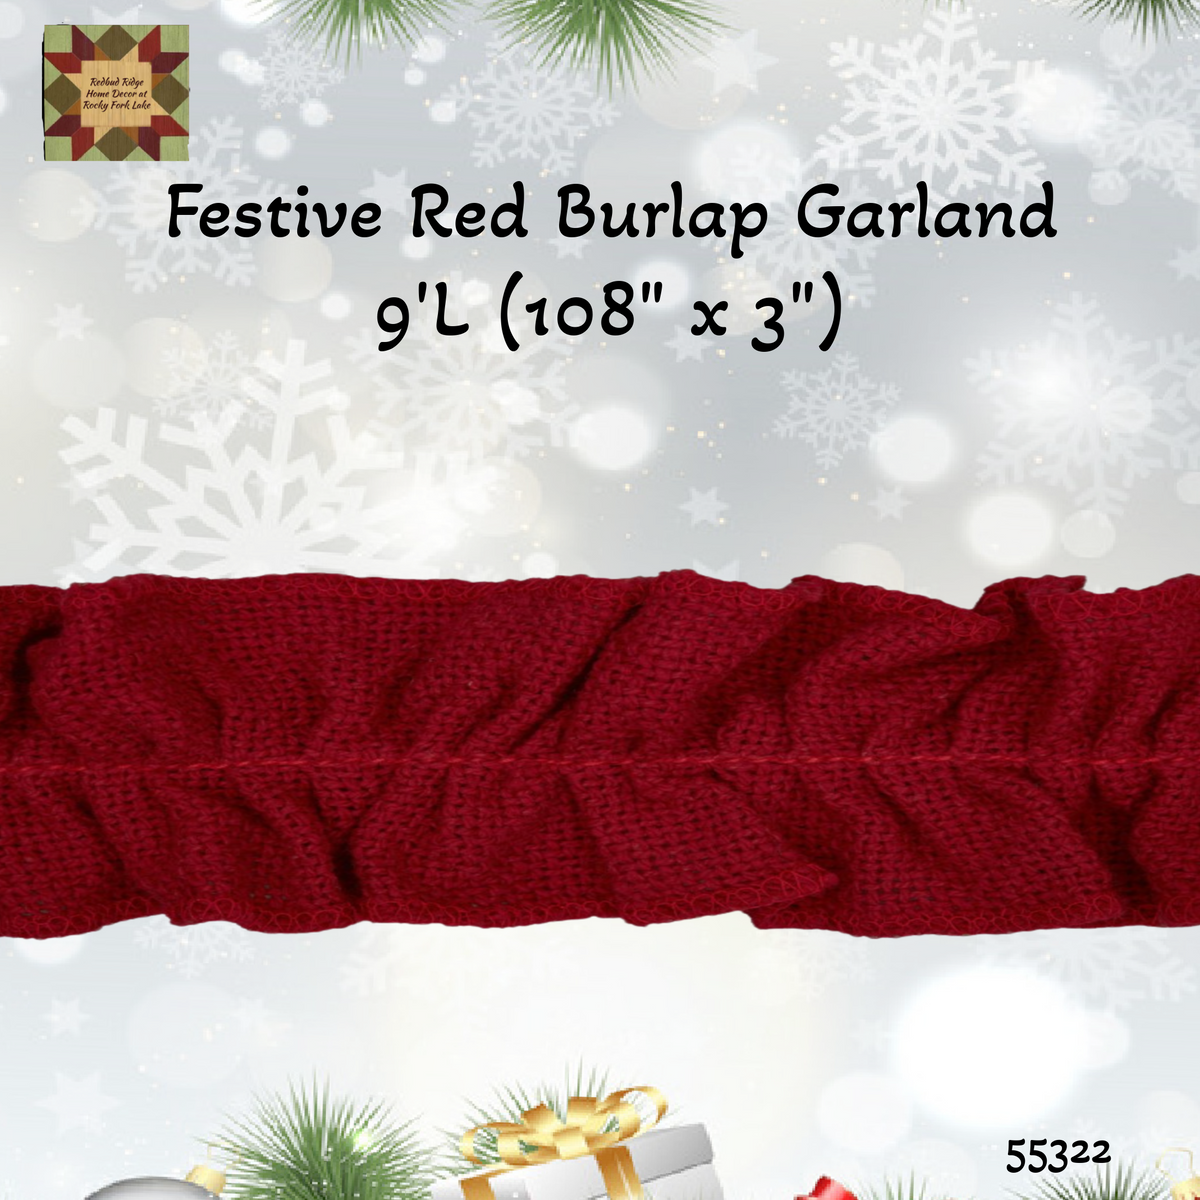 Rustic Red White Hanging Jute Rope Ball Garland Christmas Tree